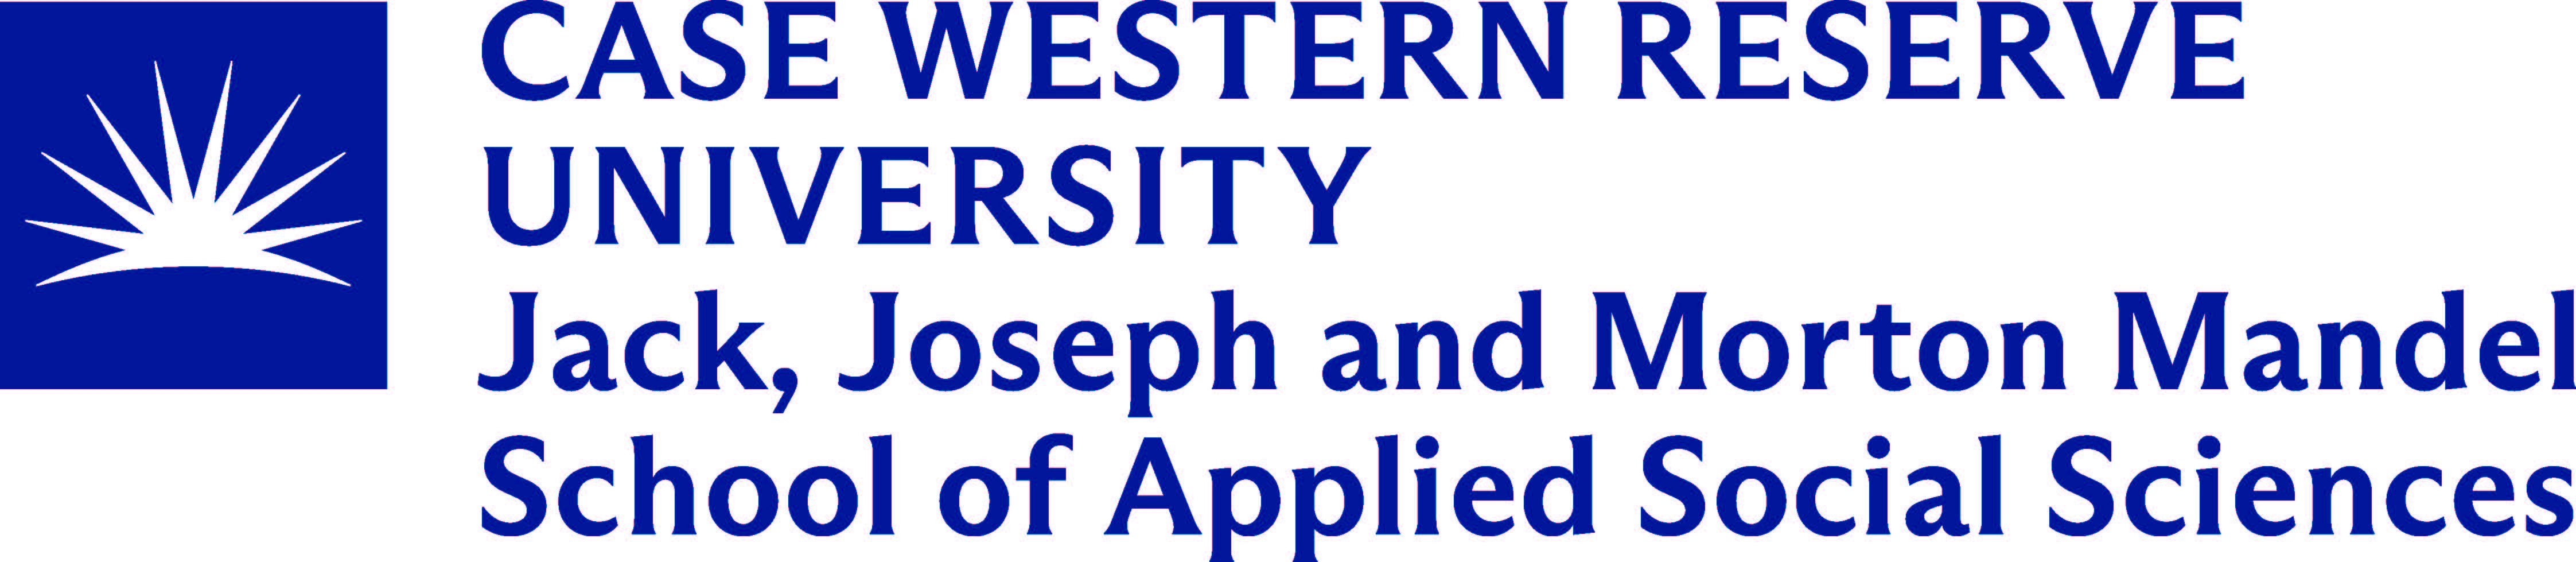 Case Western Reserve University Jack, Joseph and Morton Mandel School of Applied Social Sciences